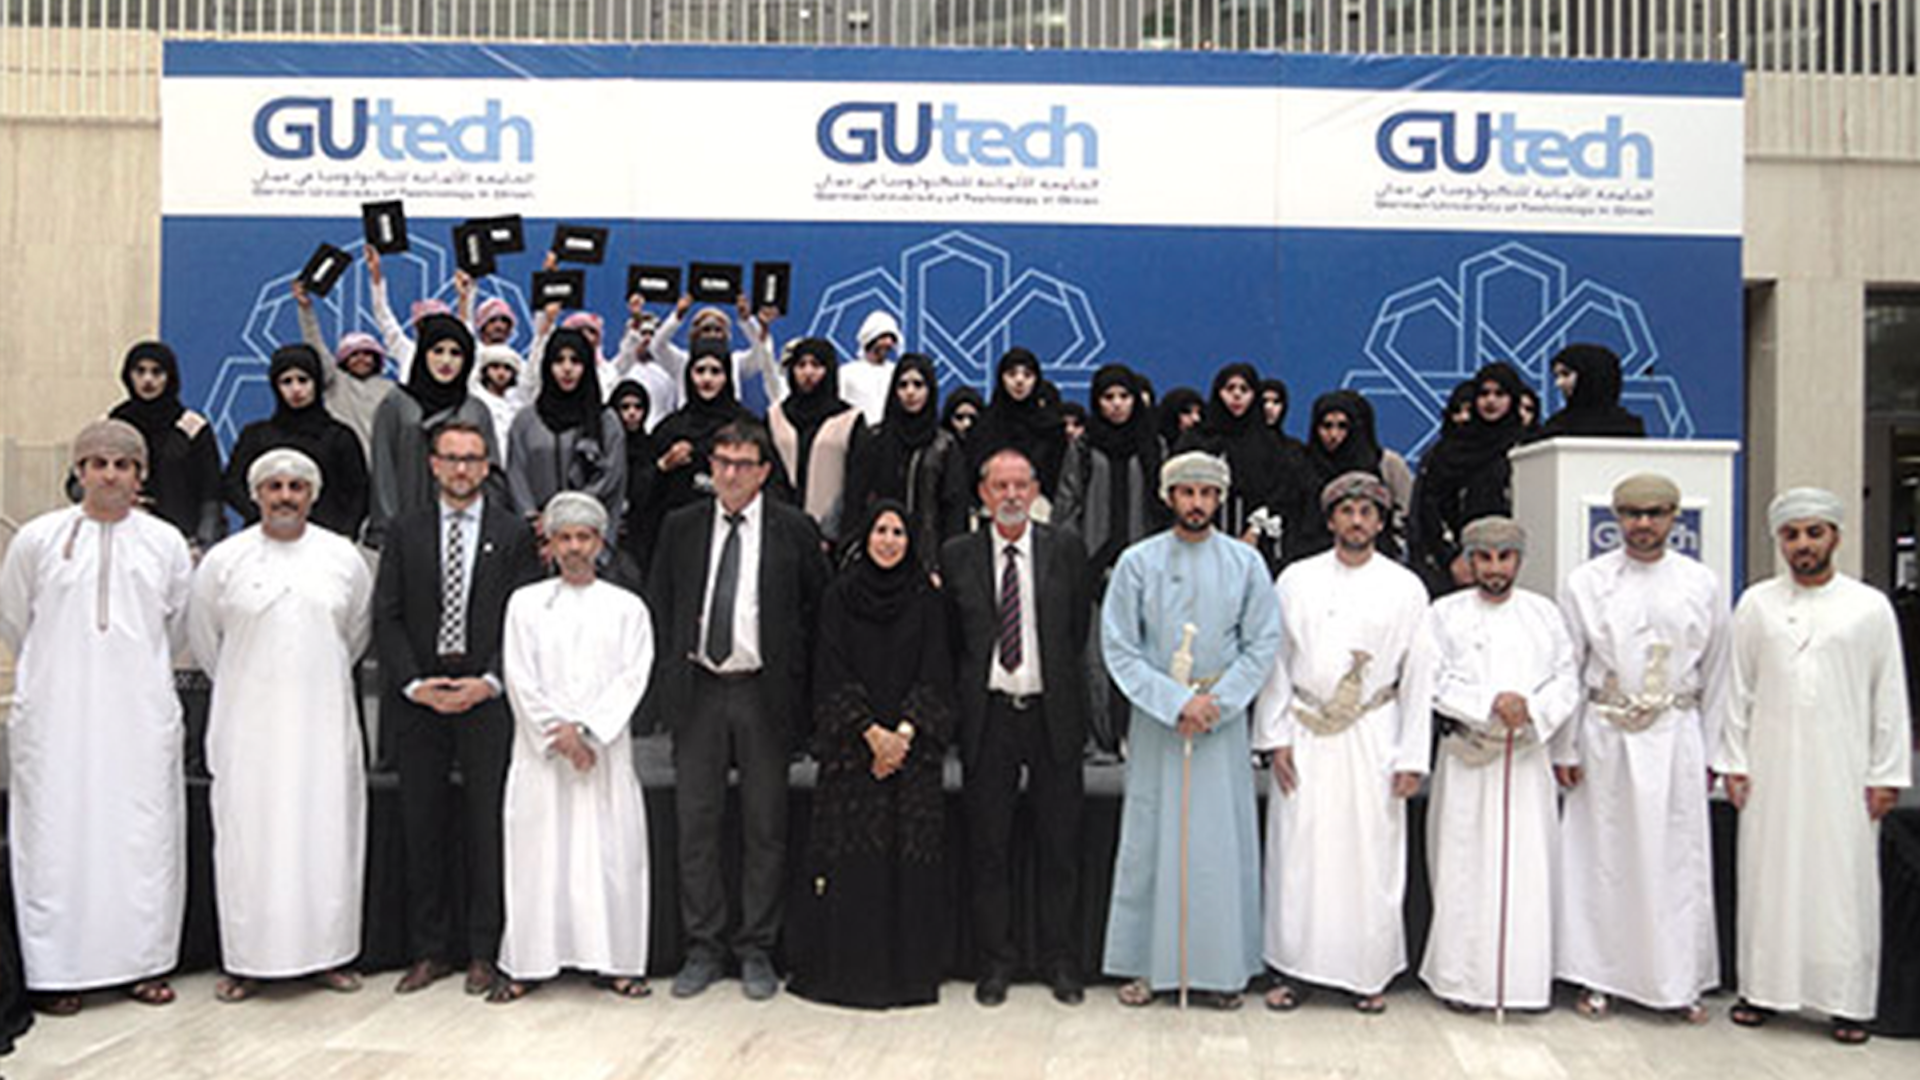 photo of a German University of Technology Oman event